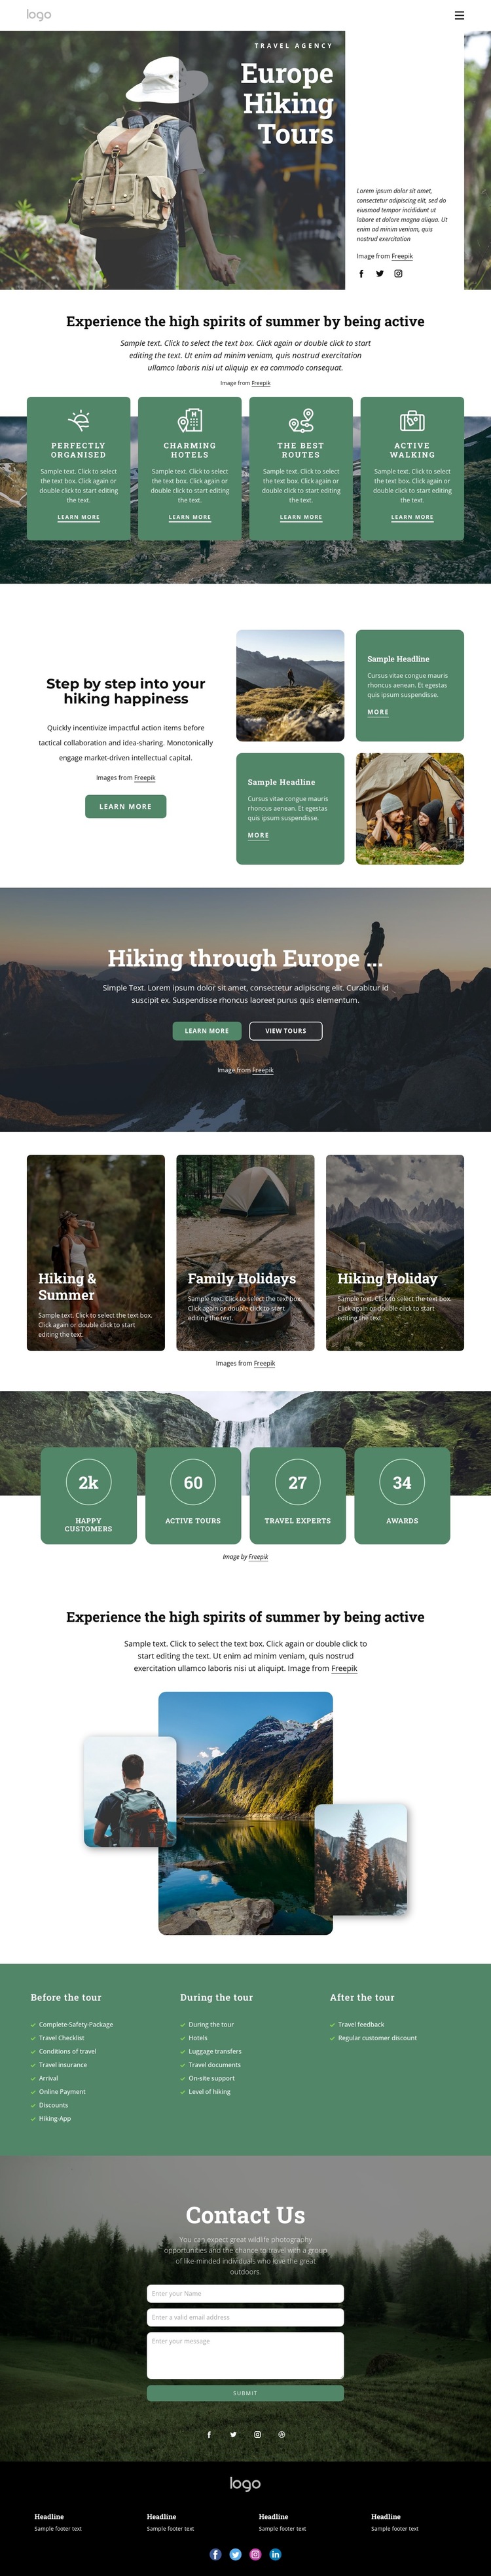 Hiking & trekking tours in Europe HTML5 Template